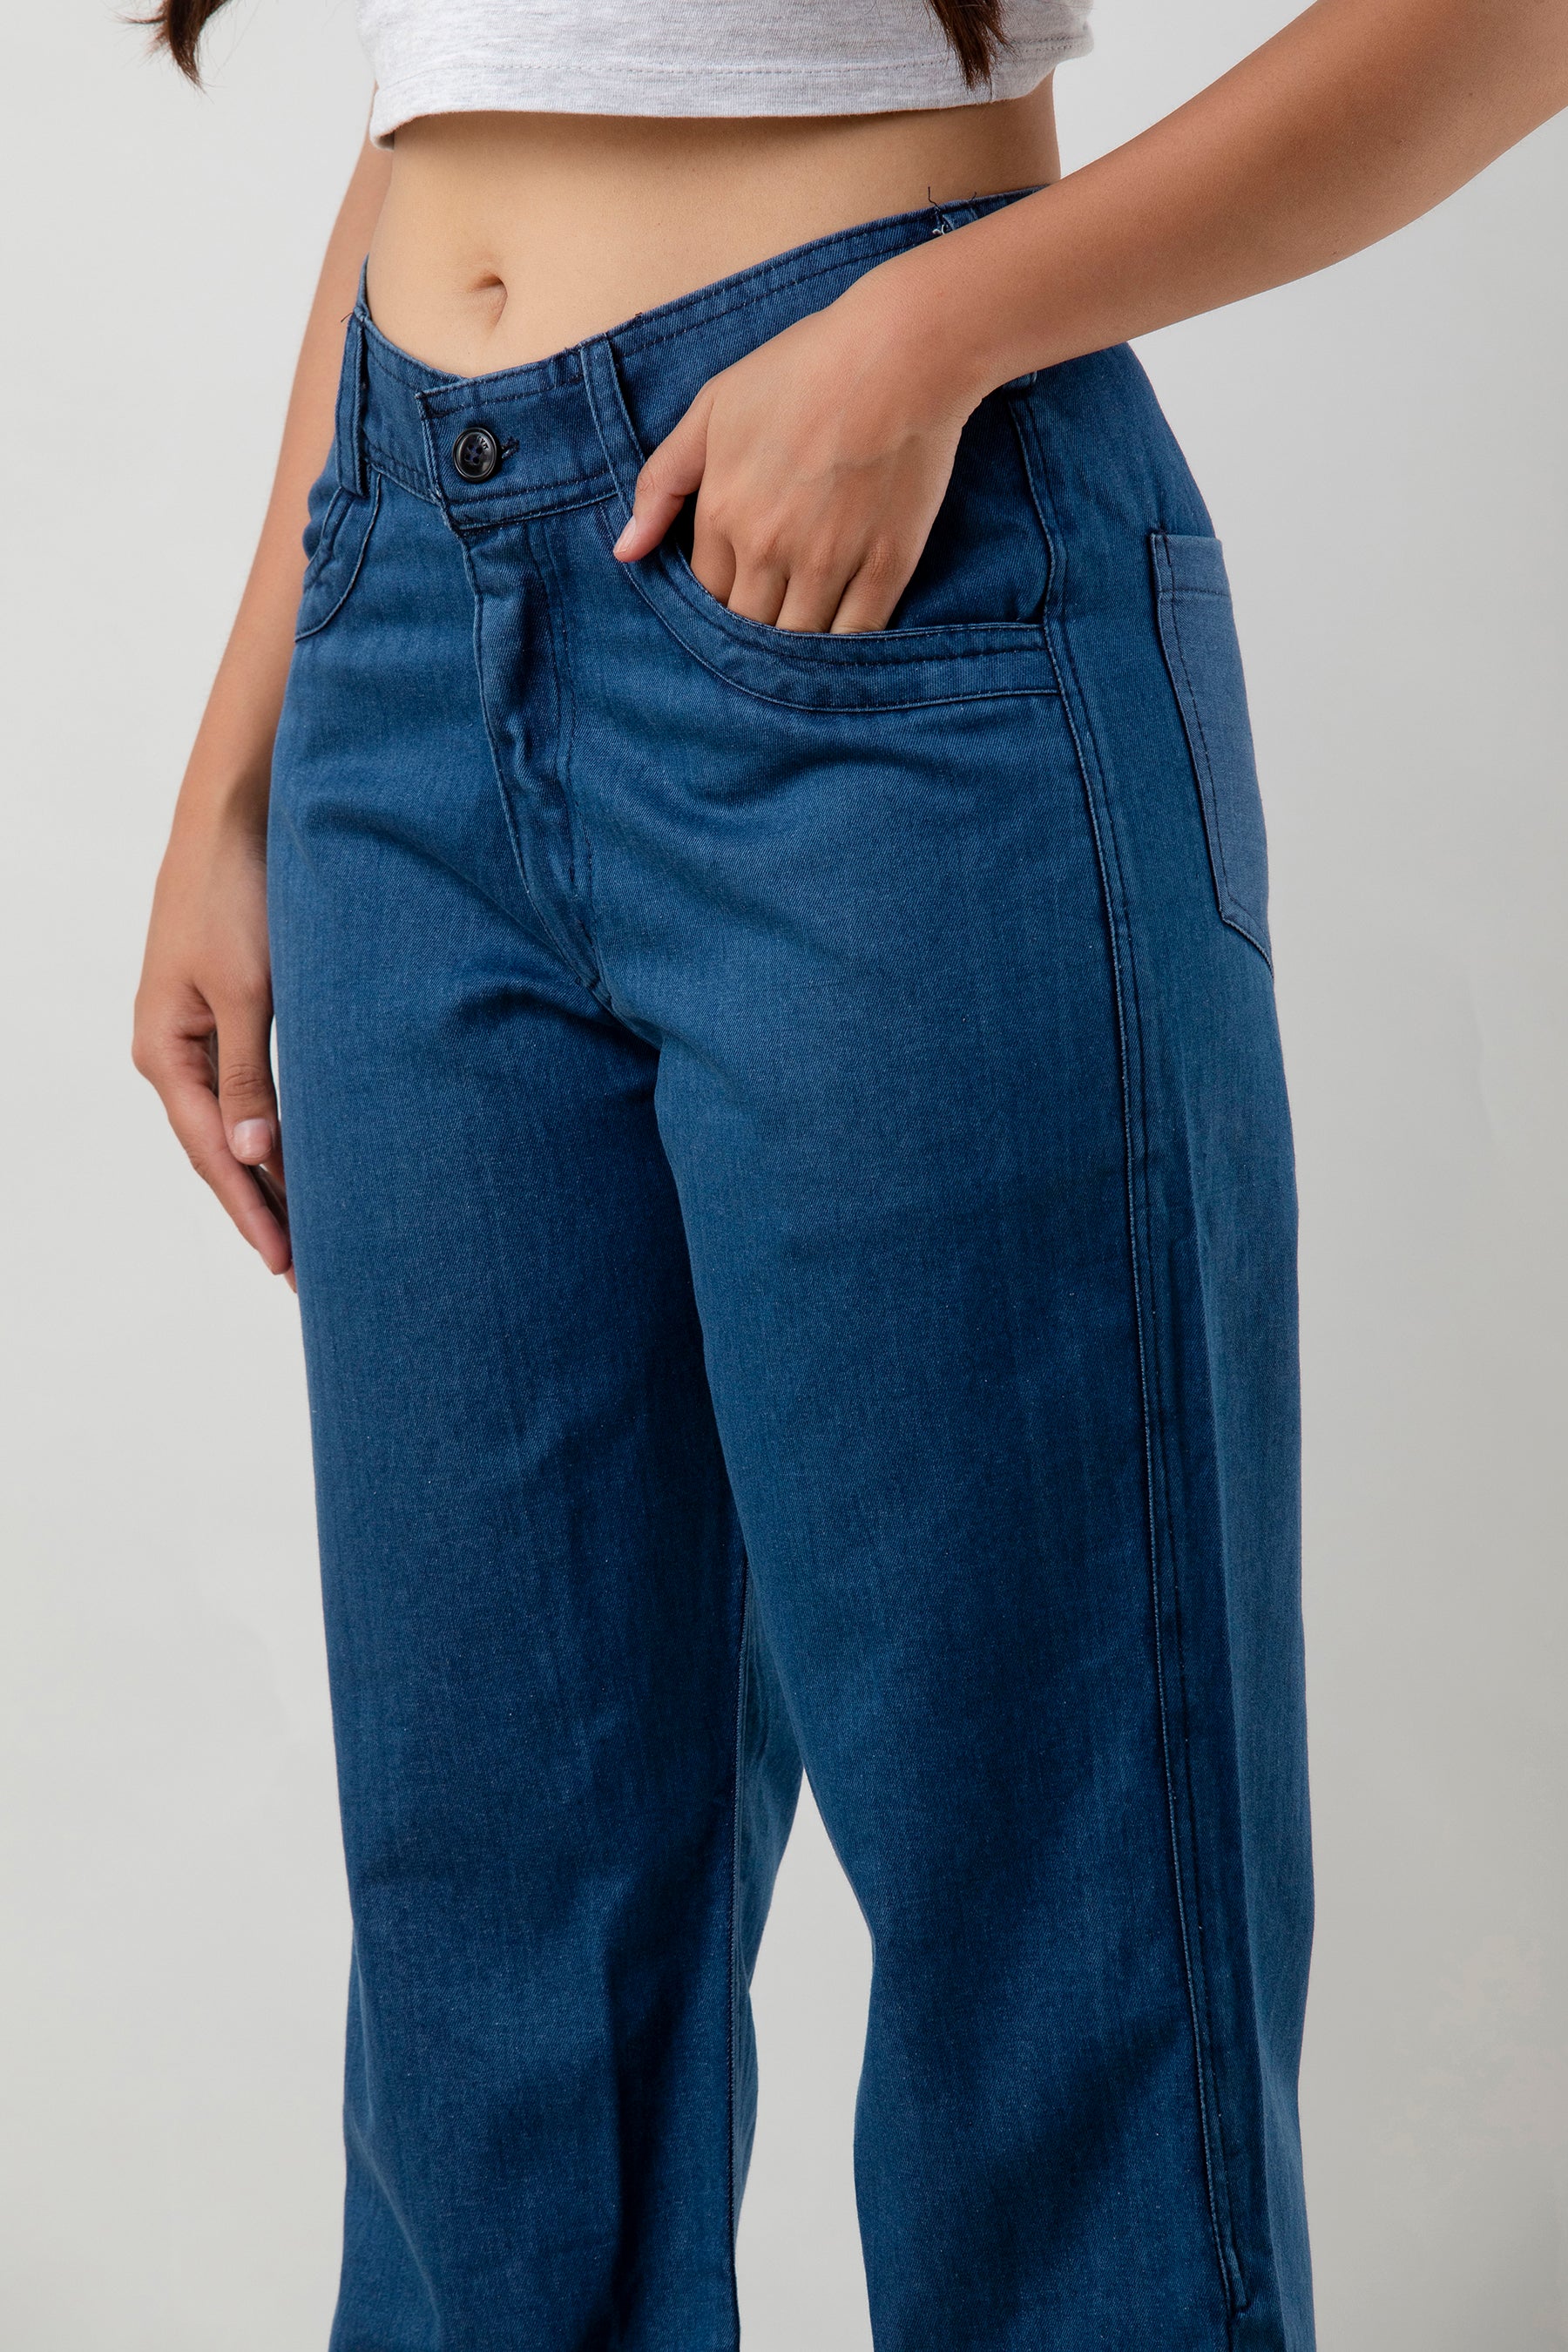 Aawari Blue Flared Bootcut Jeans